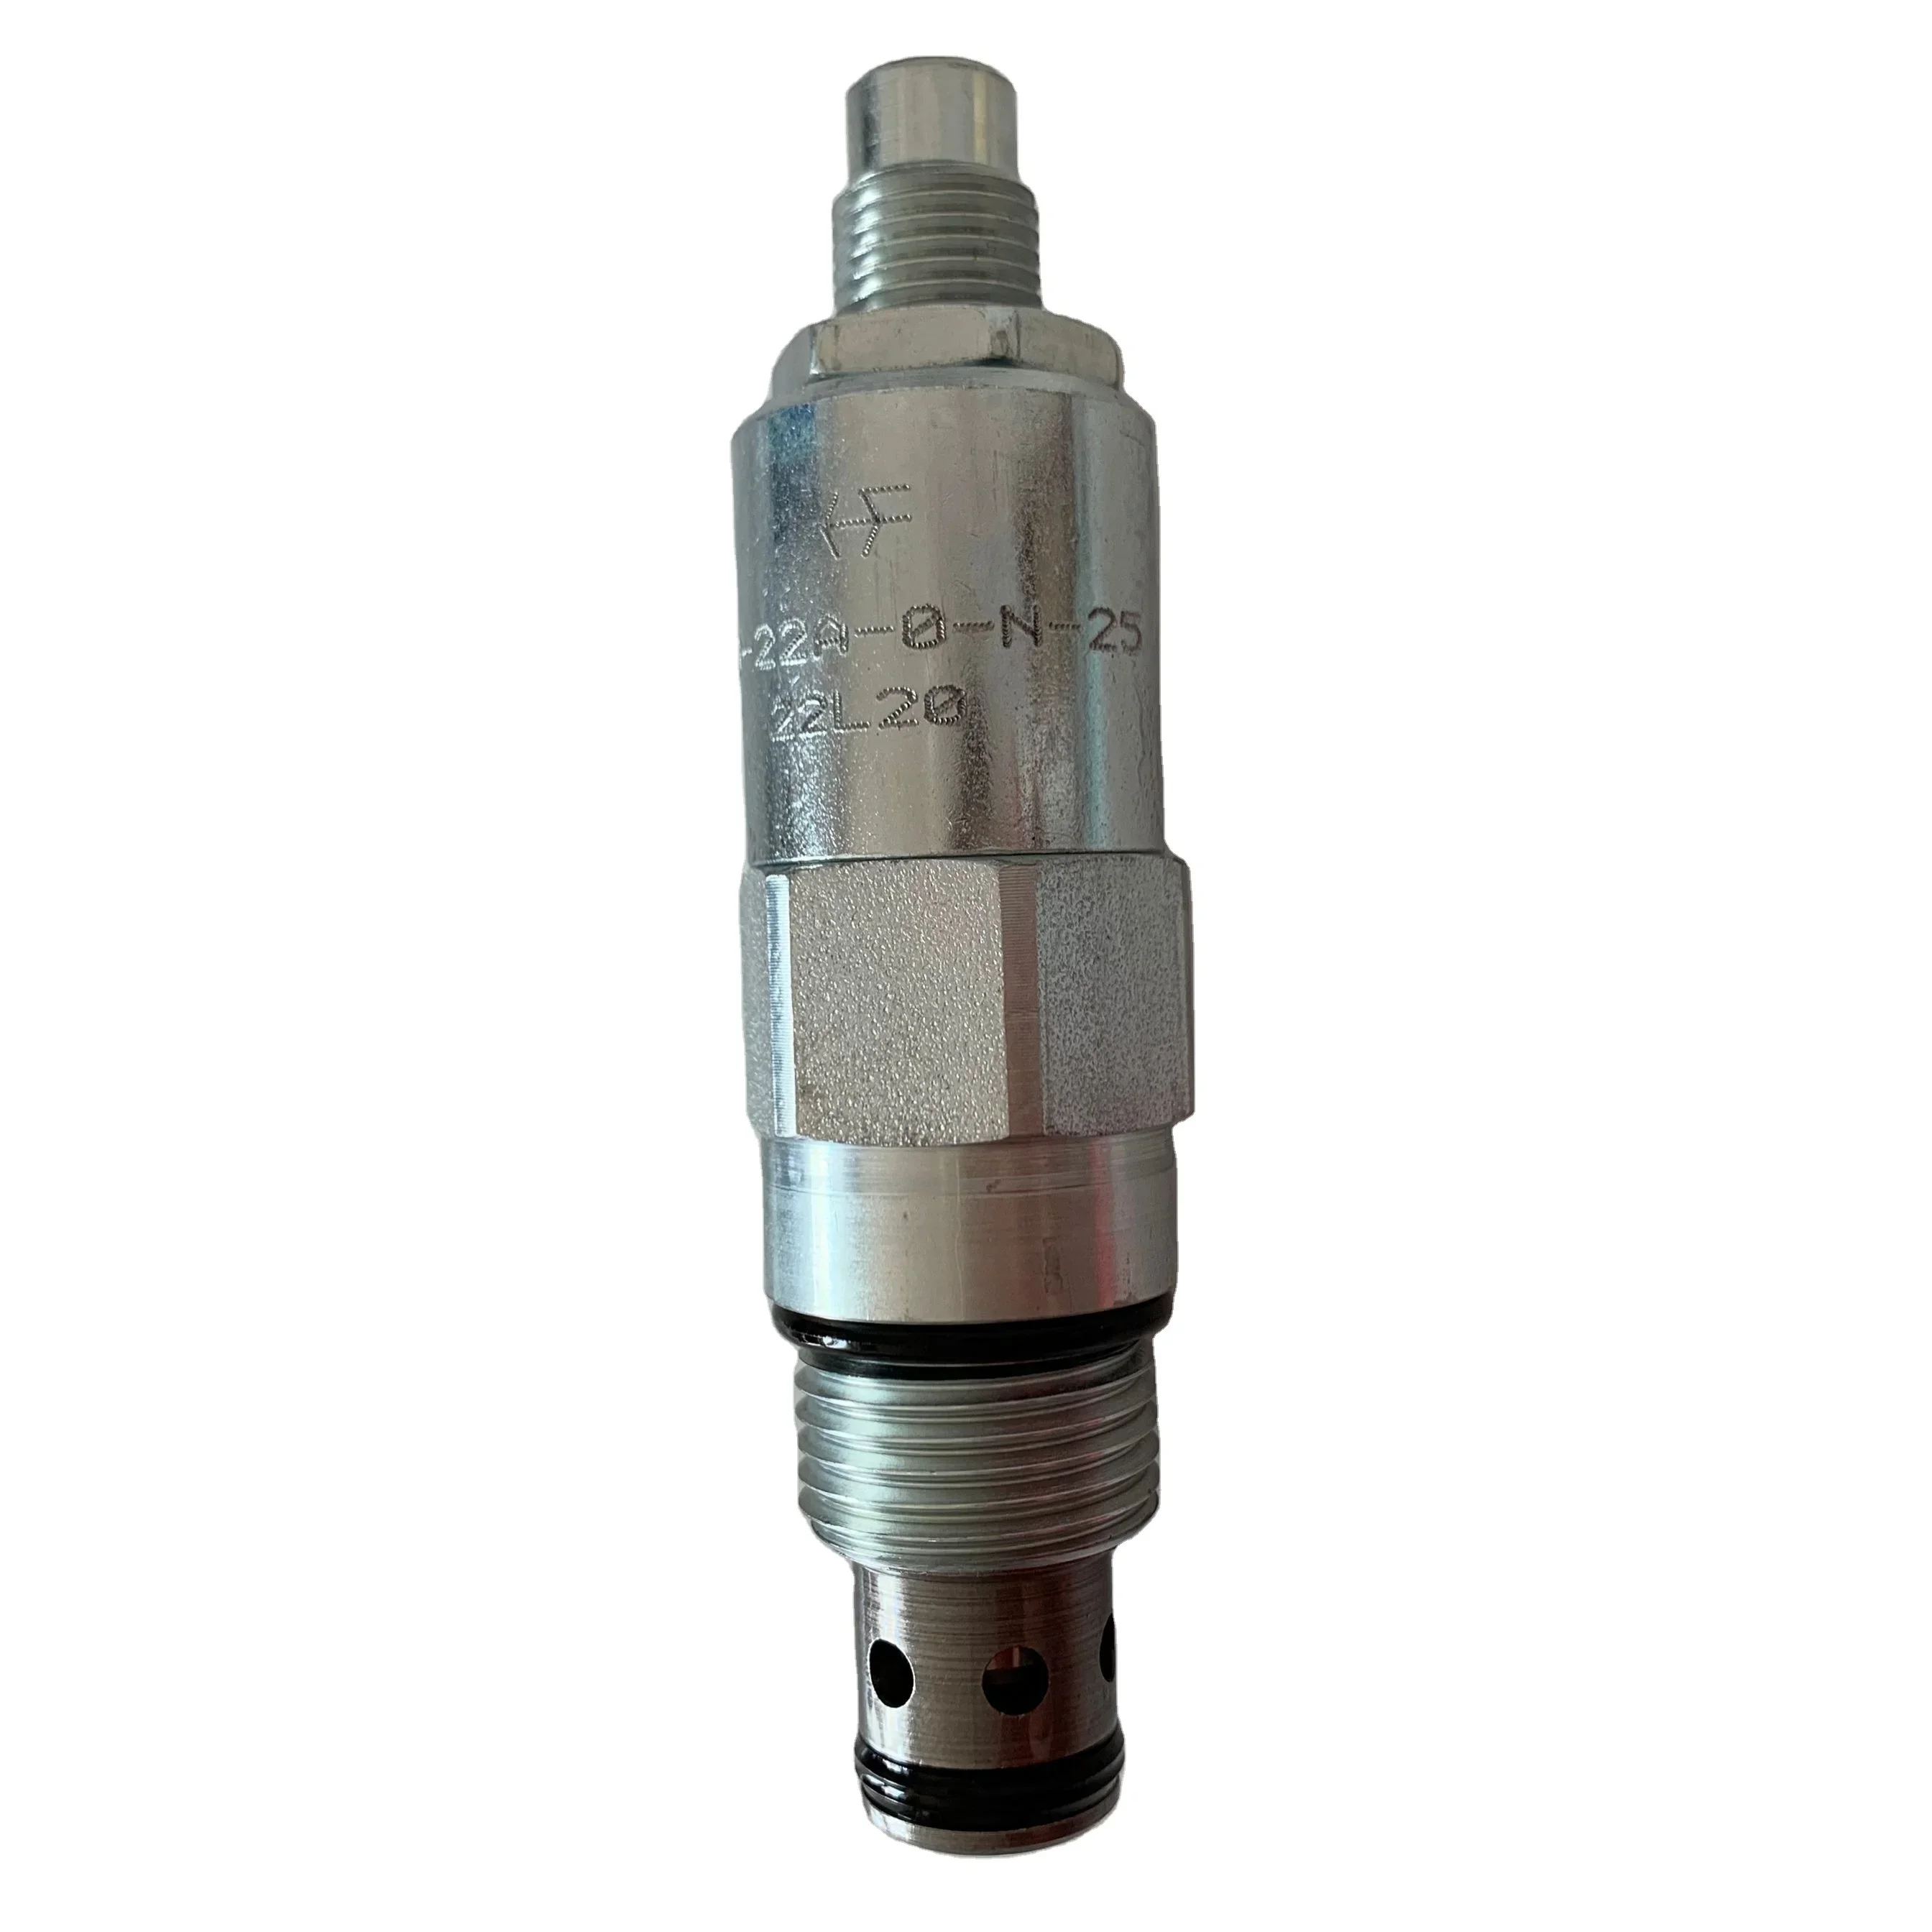 

RV10-22A-0-N RV10-22 Hydraforce original cartridge valve pressure controls relief, differential area poppet stock SUN HYDRAULICS